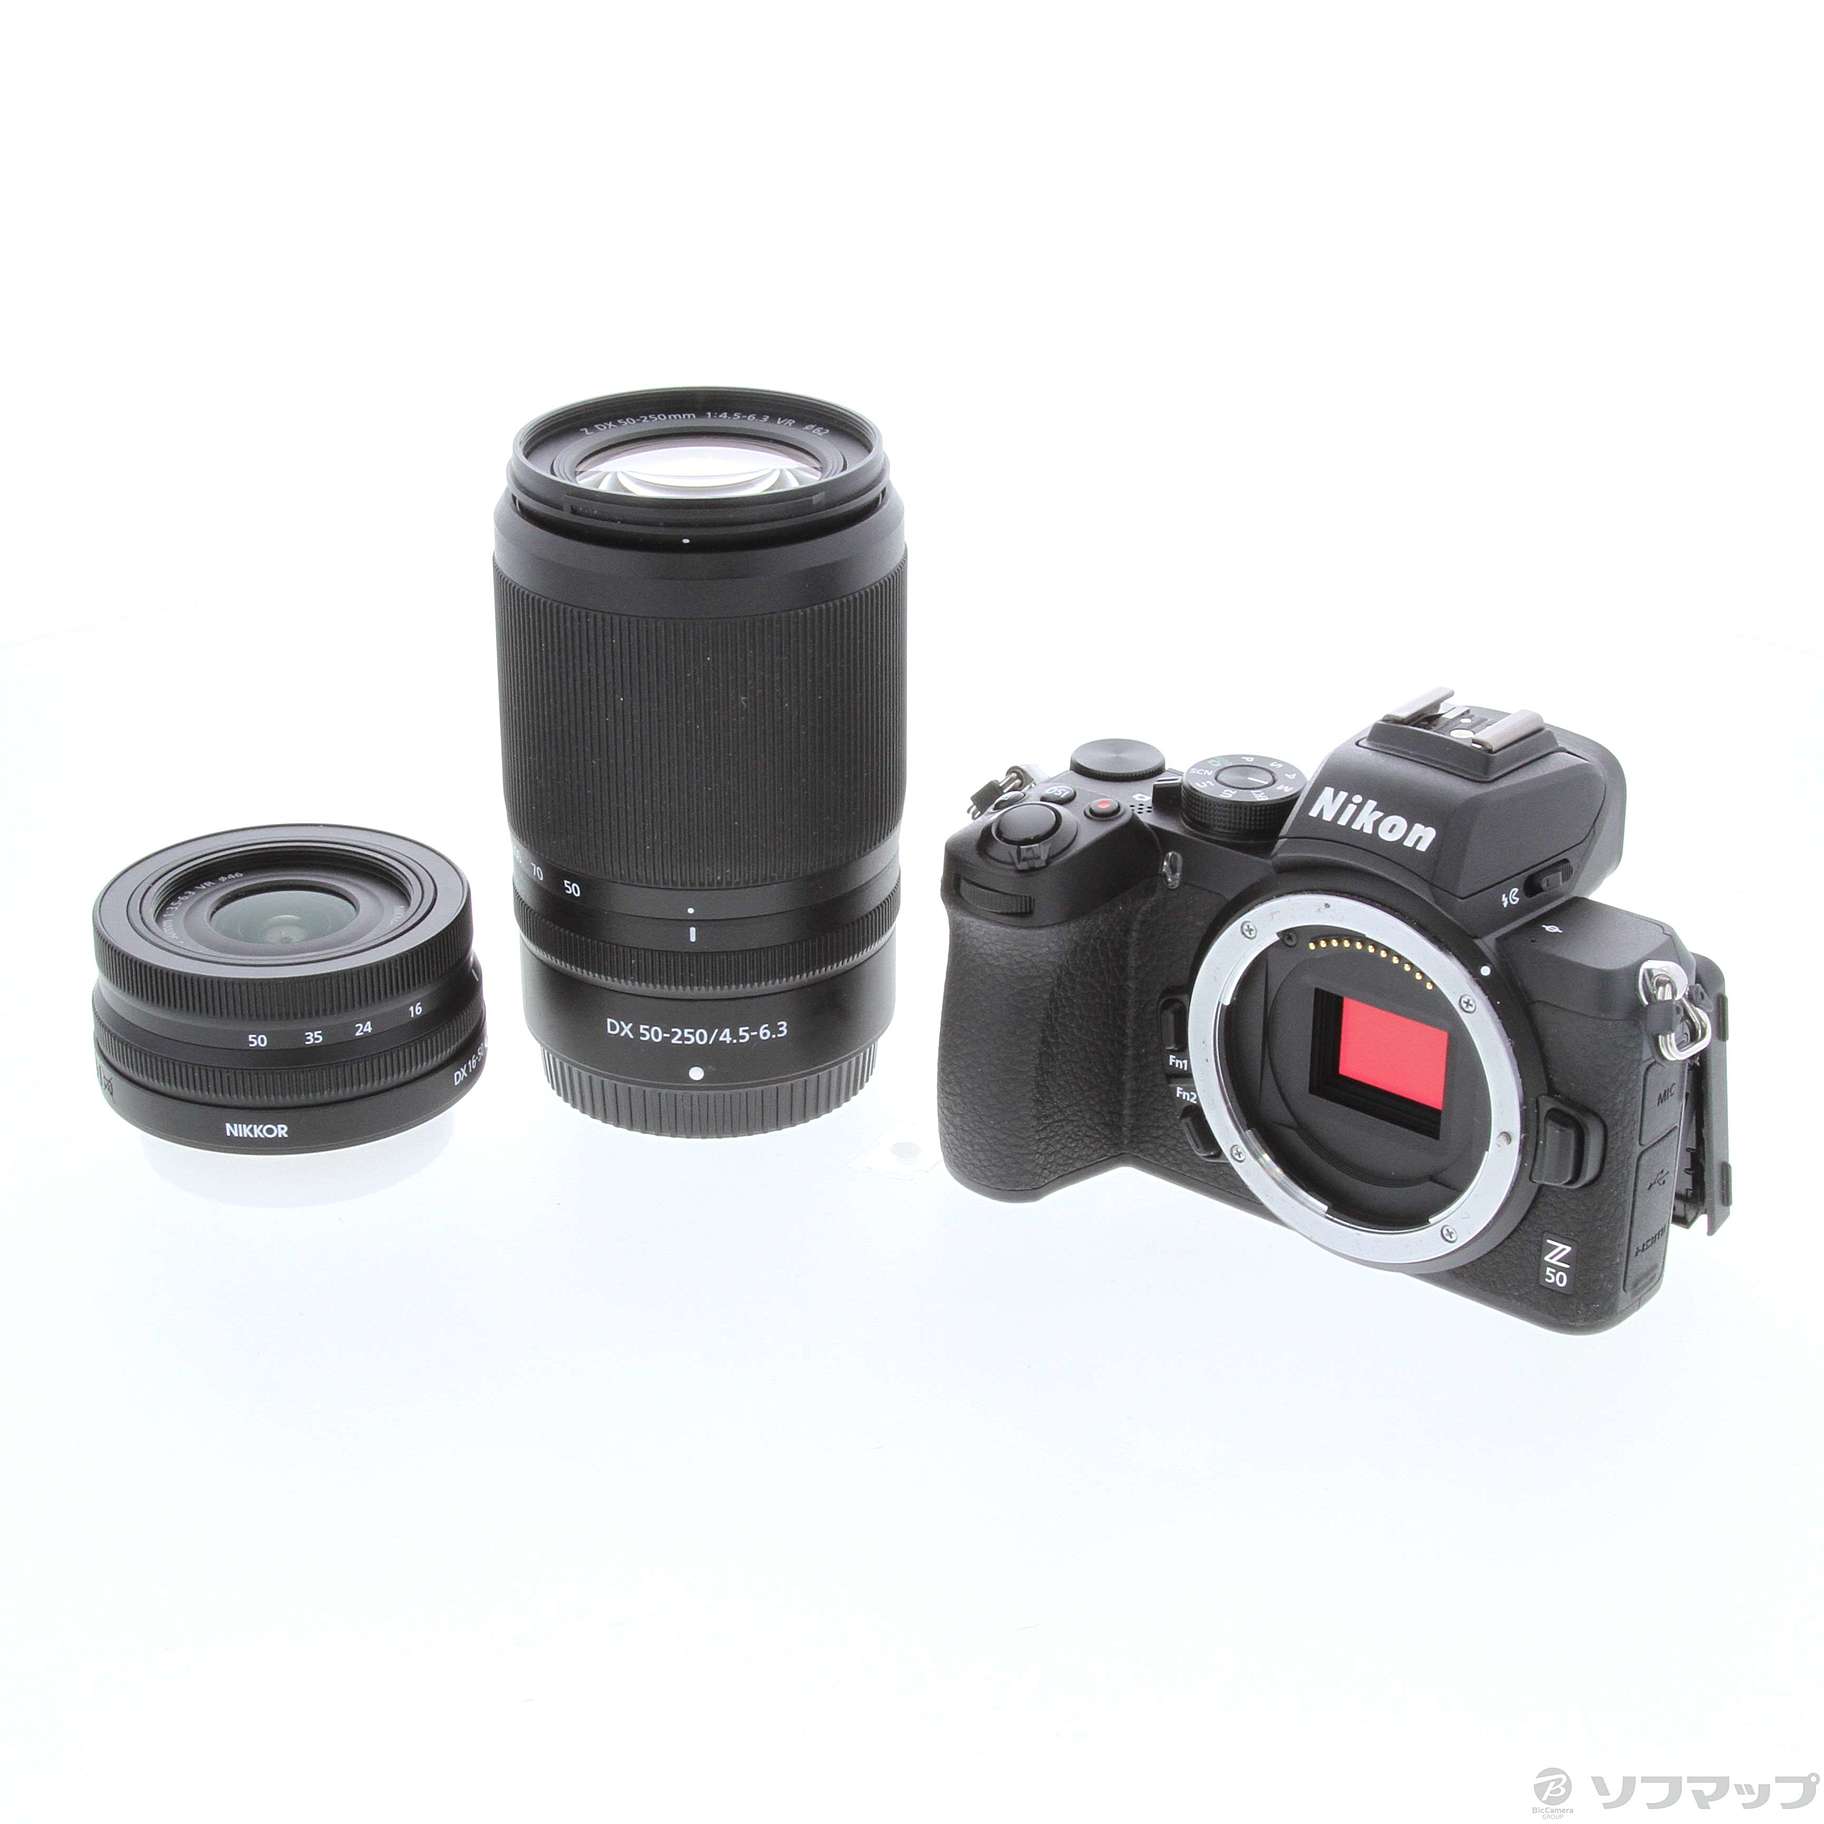 Nikon (ニコン) Z50 ダブルズームキット